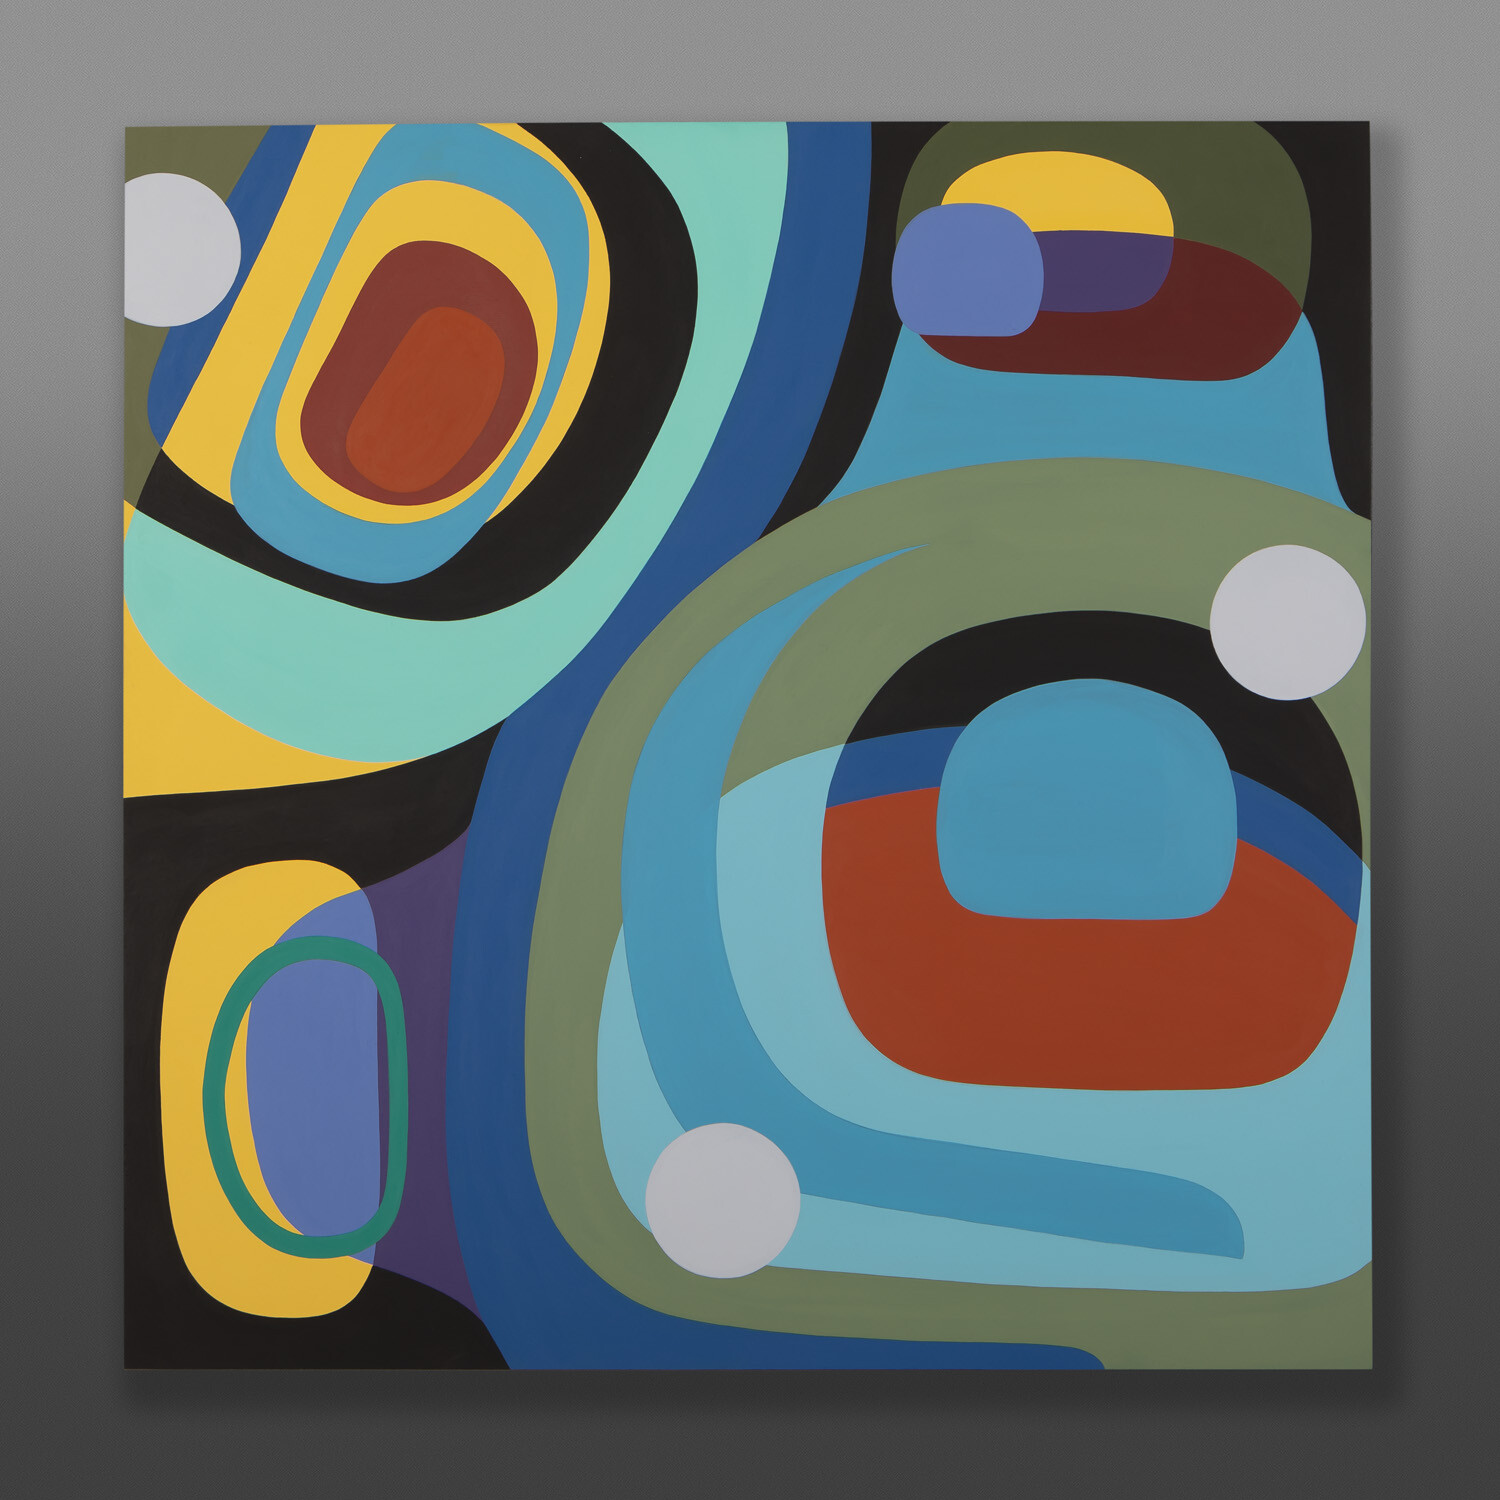 Summer Day
Steve Smith - Dla'kwagila
Oweekeno
Acrylic on birch panel
30" x 30" x 1½"
$3800